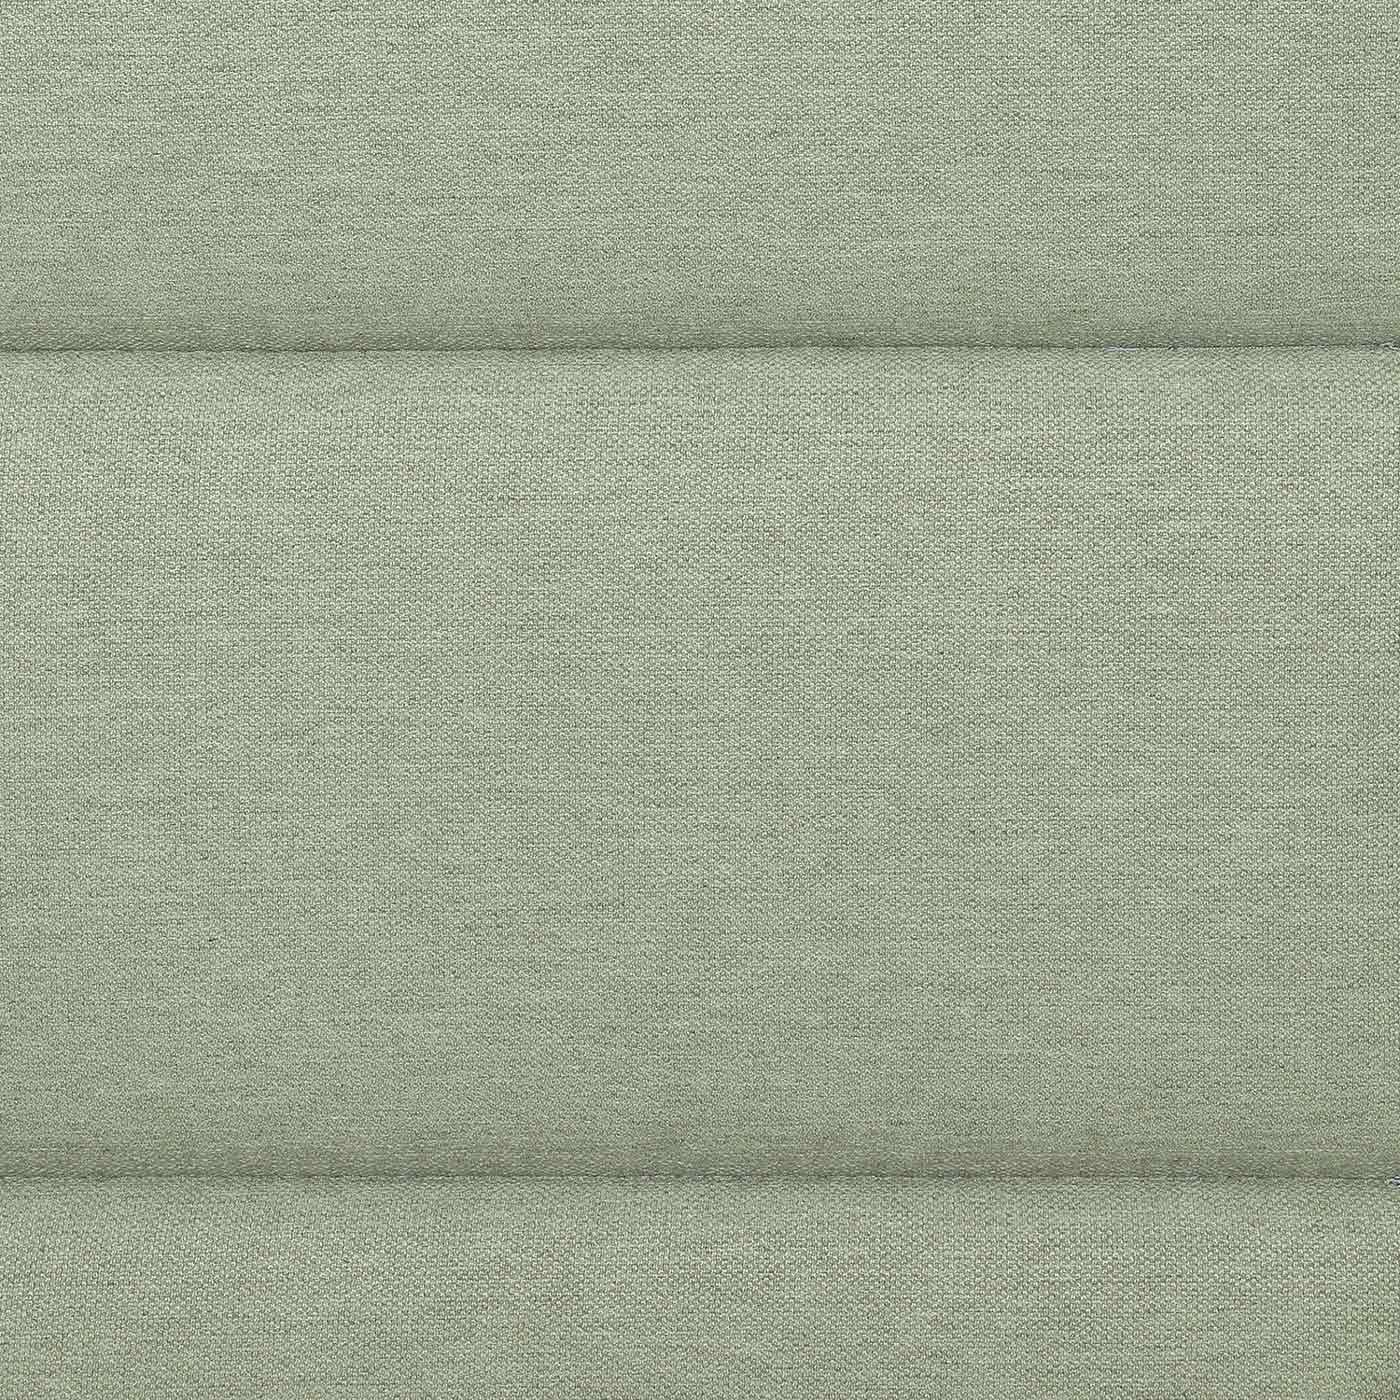 GO-DE Sesselauflage mittel 108x48cm Grün Polyester